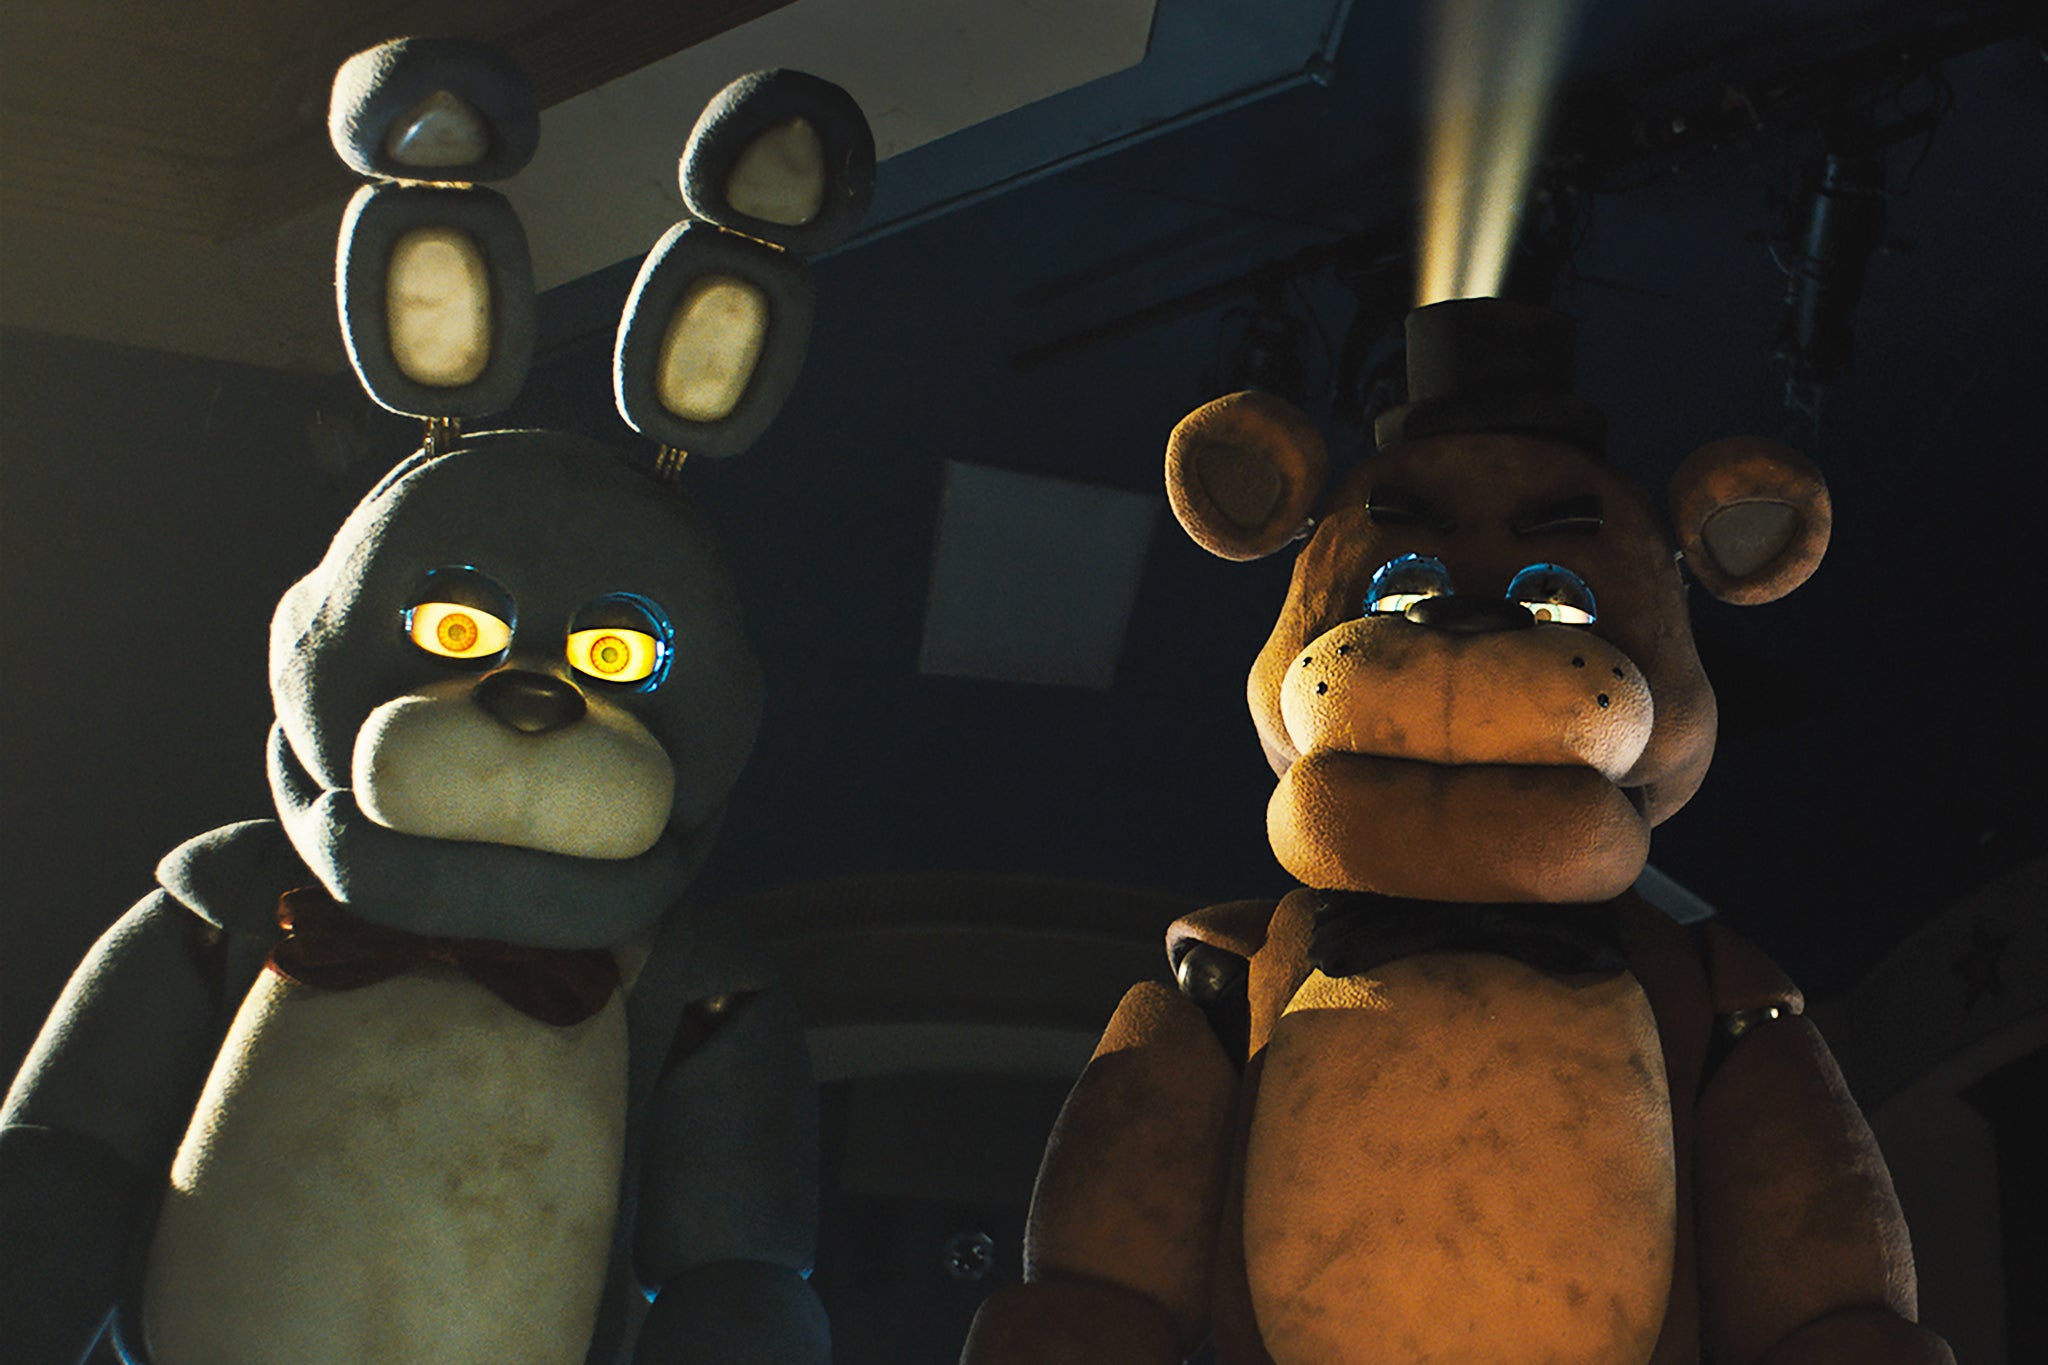 Five Nights At Freddy's' Trailer: The Horror Game Phenomenon